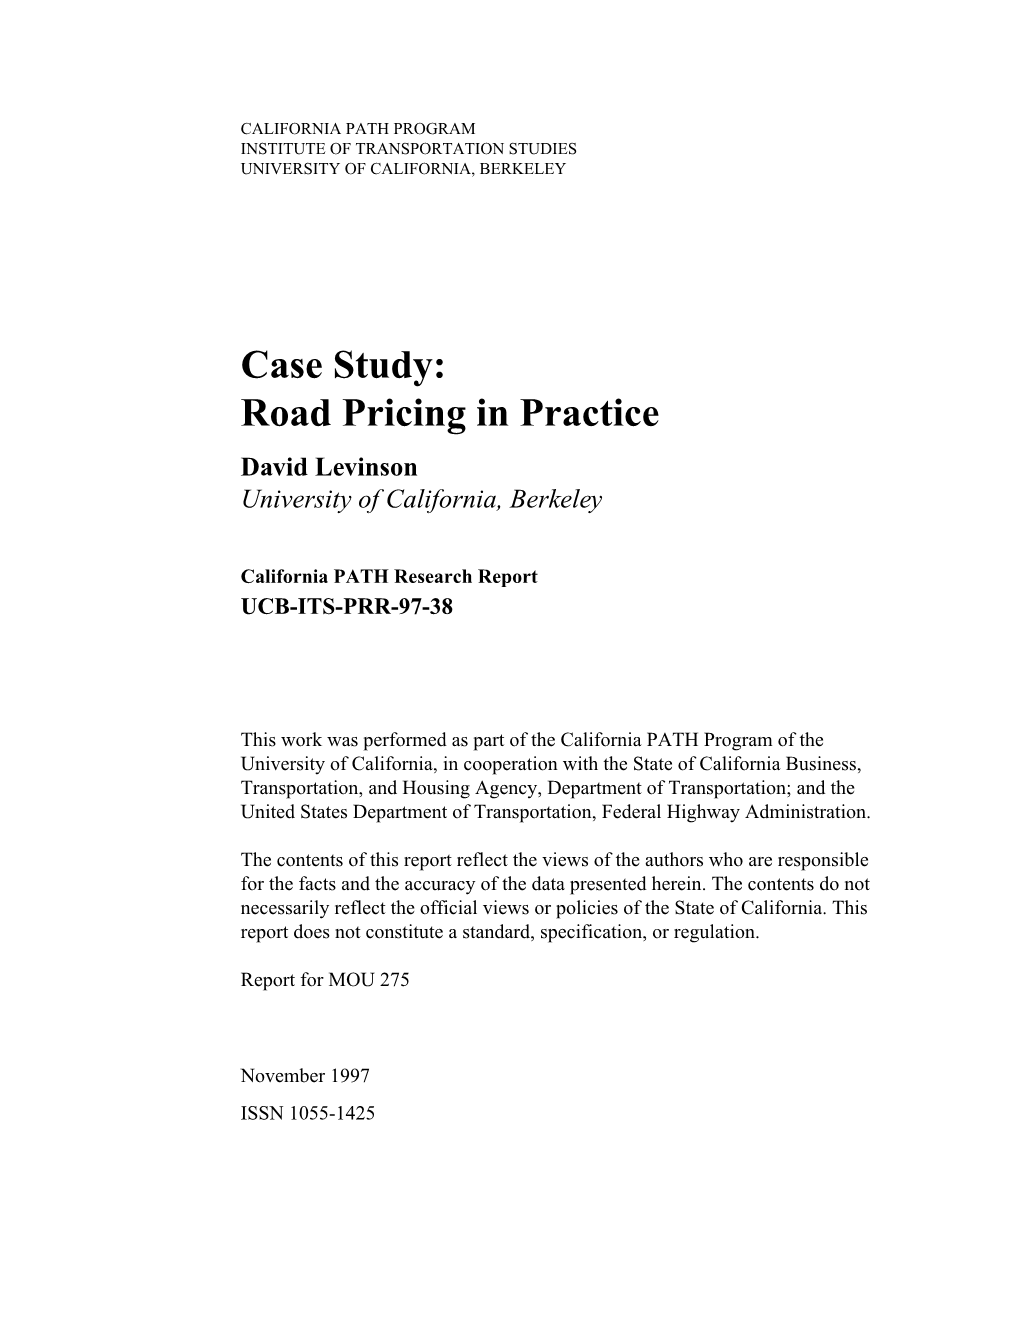 Case Study: Road Pricing in Practice David Levinson University of California, Berkeley